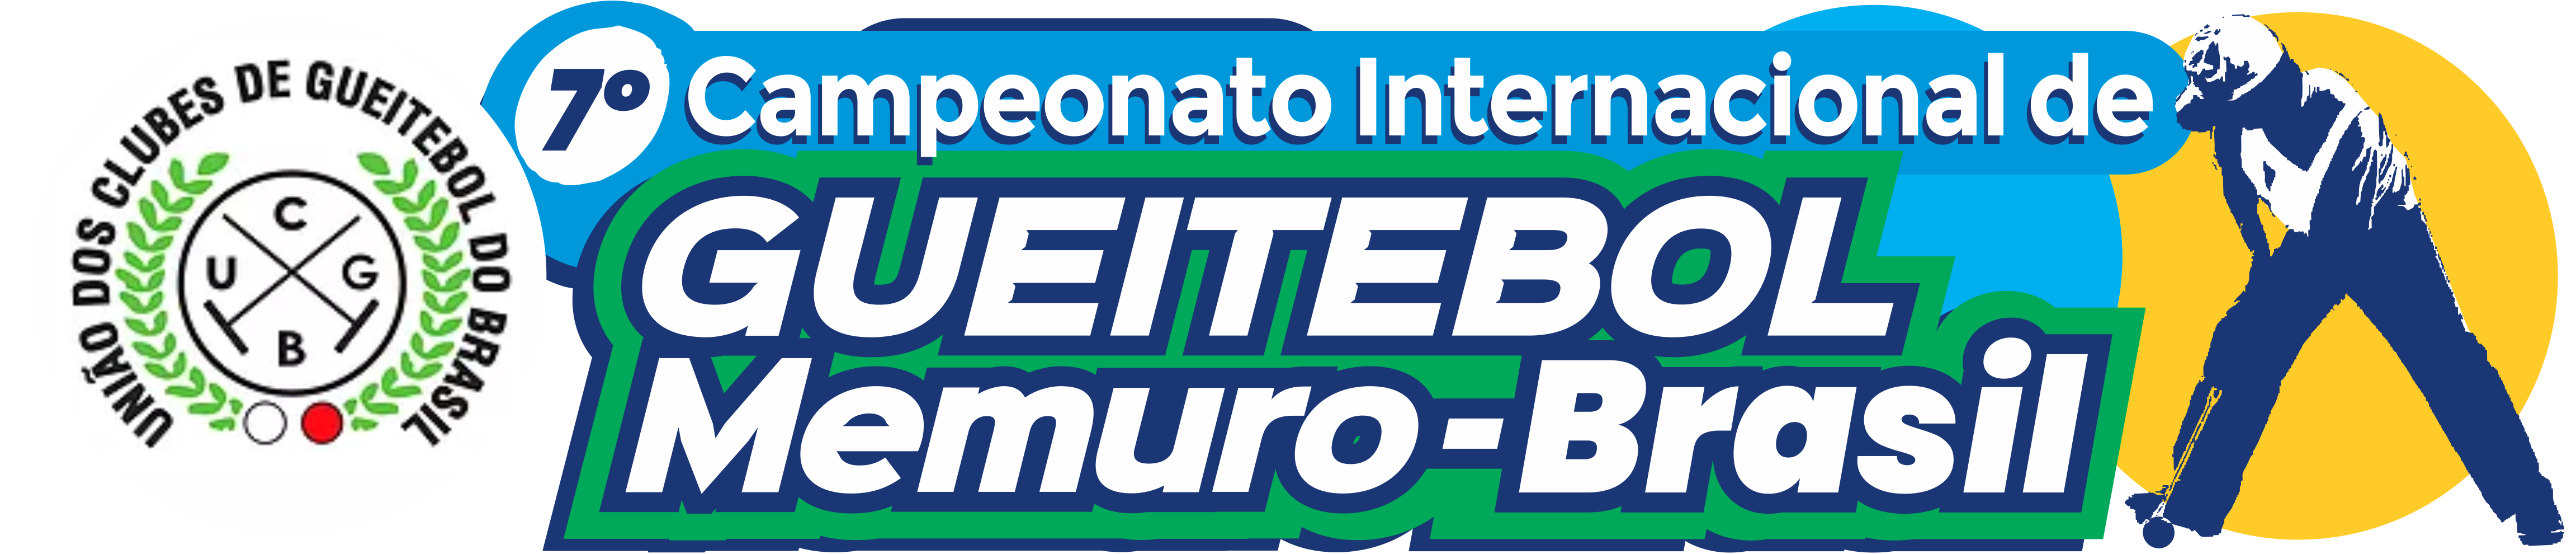 7º Campeonato Internacional de Gueitebol Memuro-Brasil